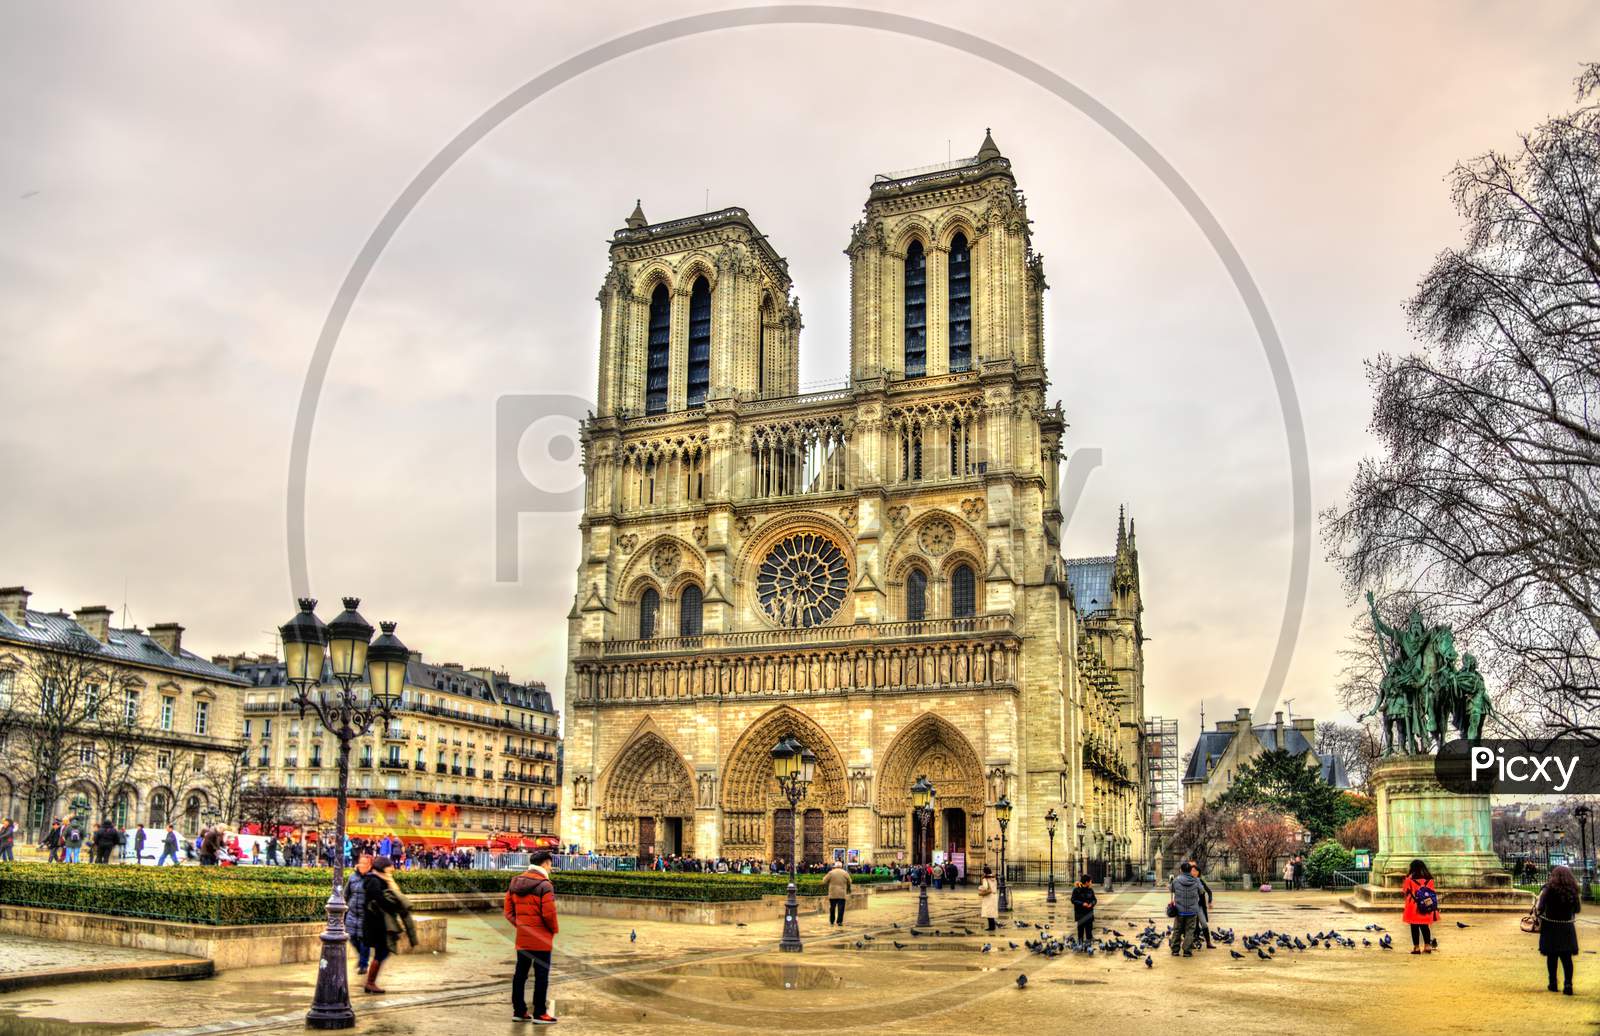 Parvis Notre-Dame - Jean-Paul-Ii Square In Paris, France